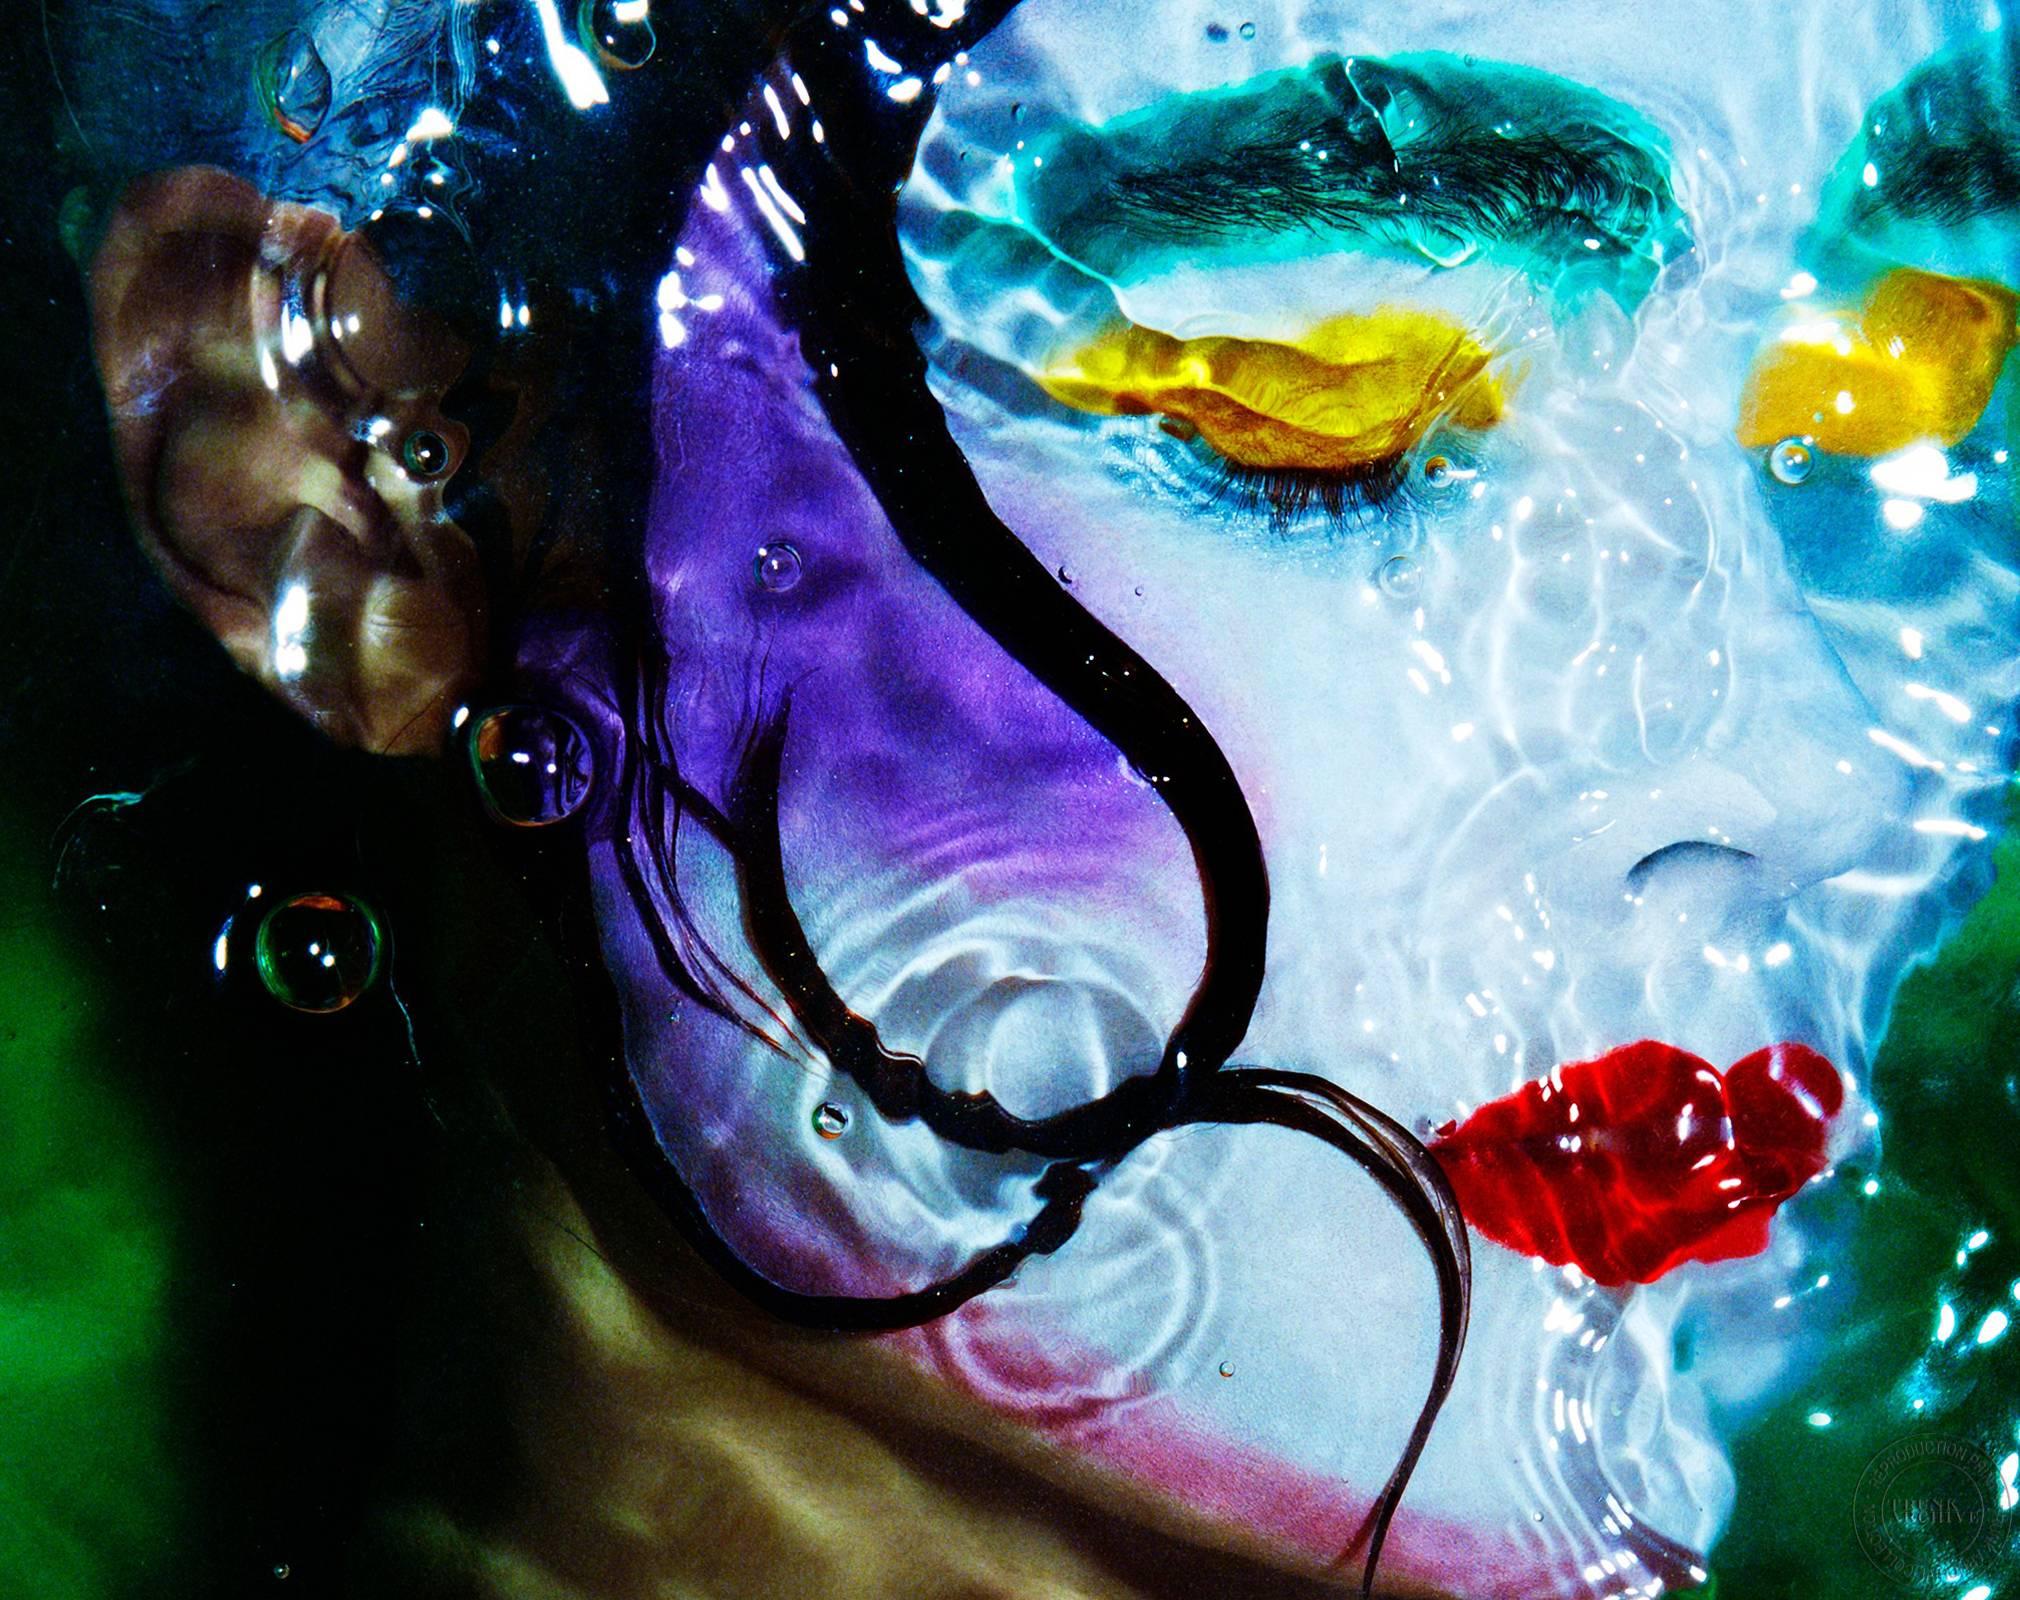 Greg Kadel Color Photograph - Beauty Portrait (In Water)